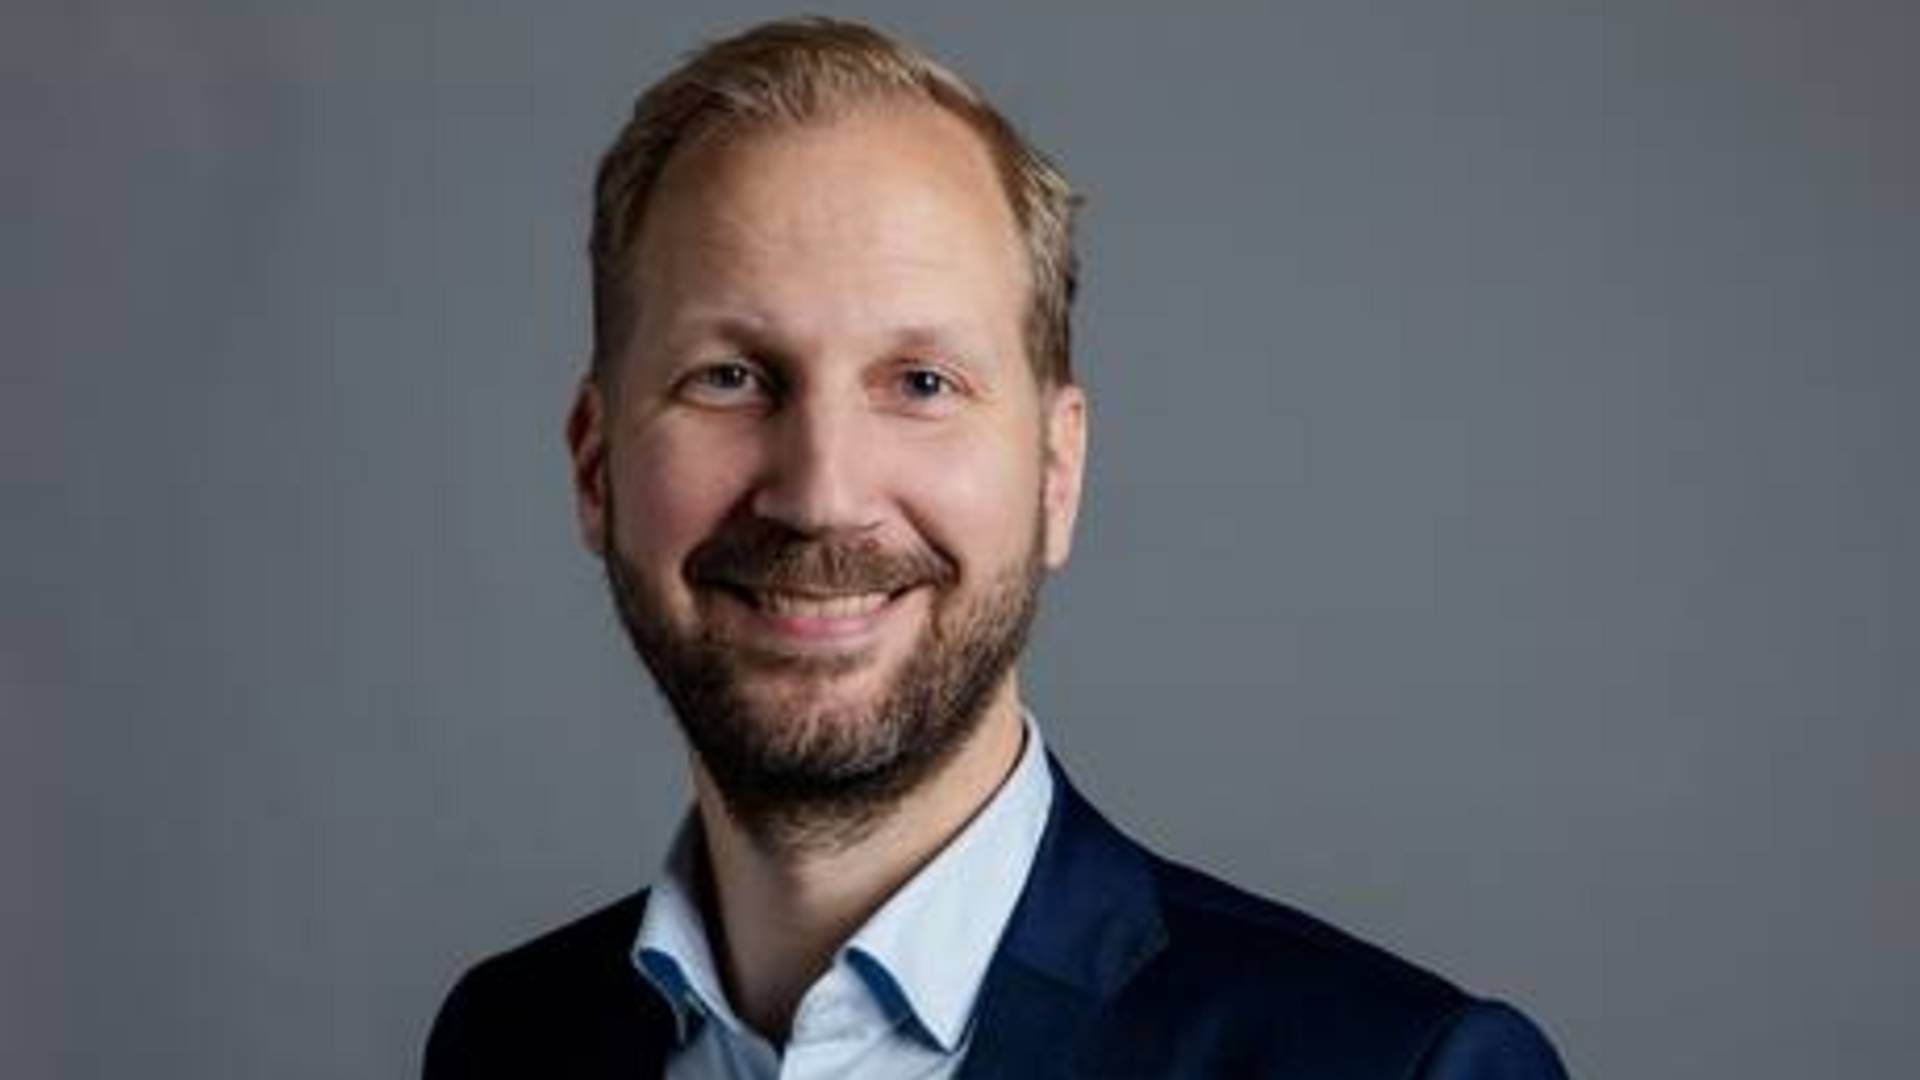 Johan Pålsson, Co-managing Partner at CapMan Buyout. | Photo: PR / Capman